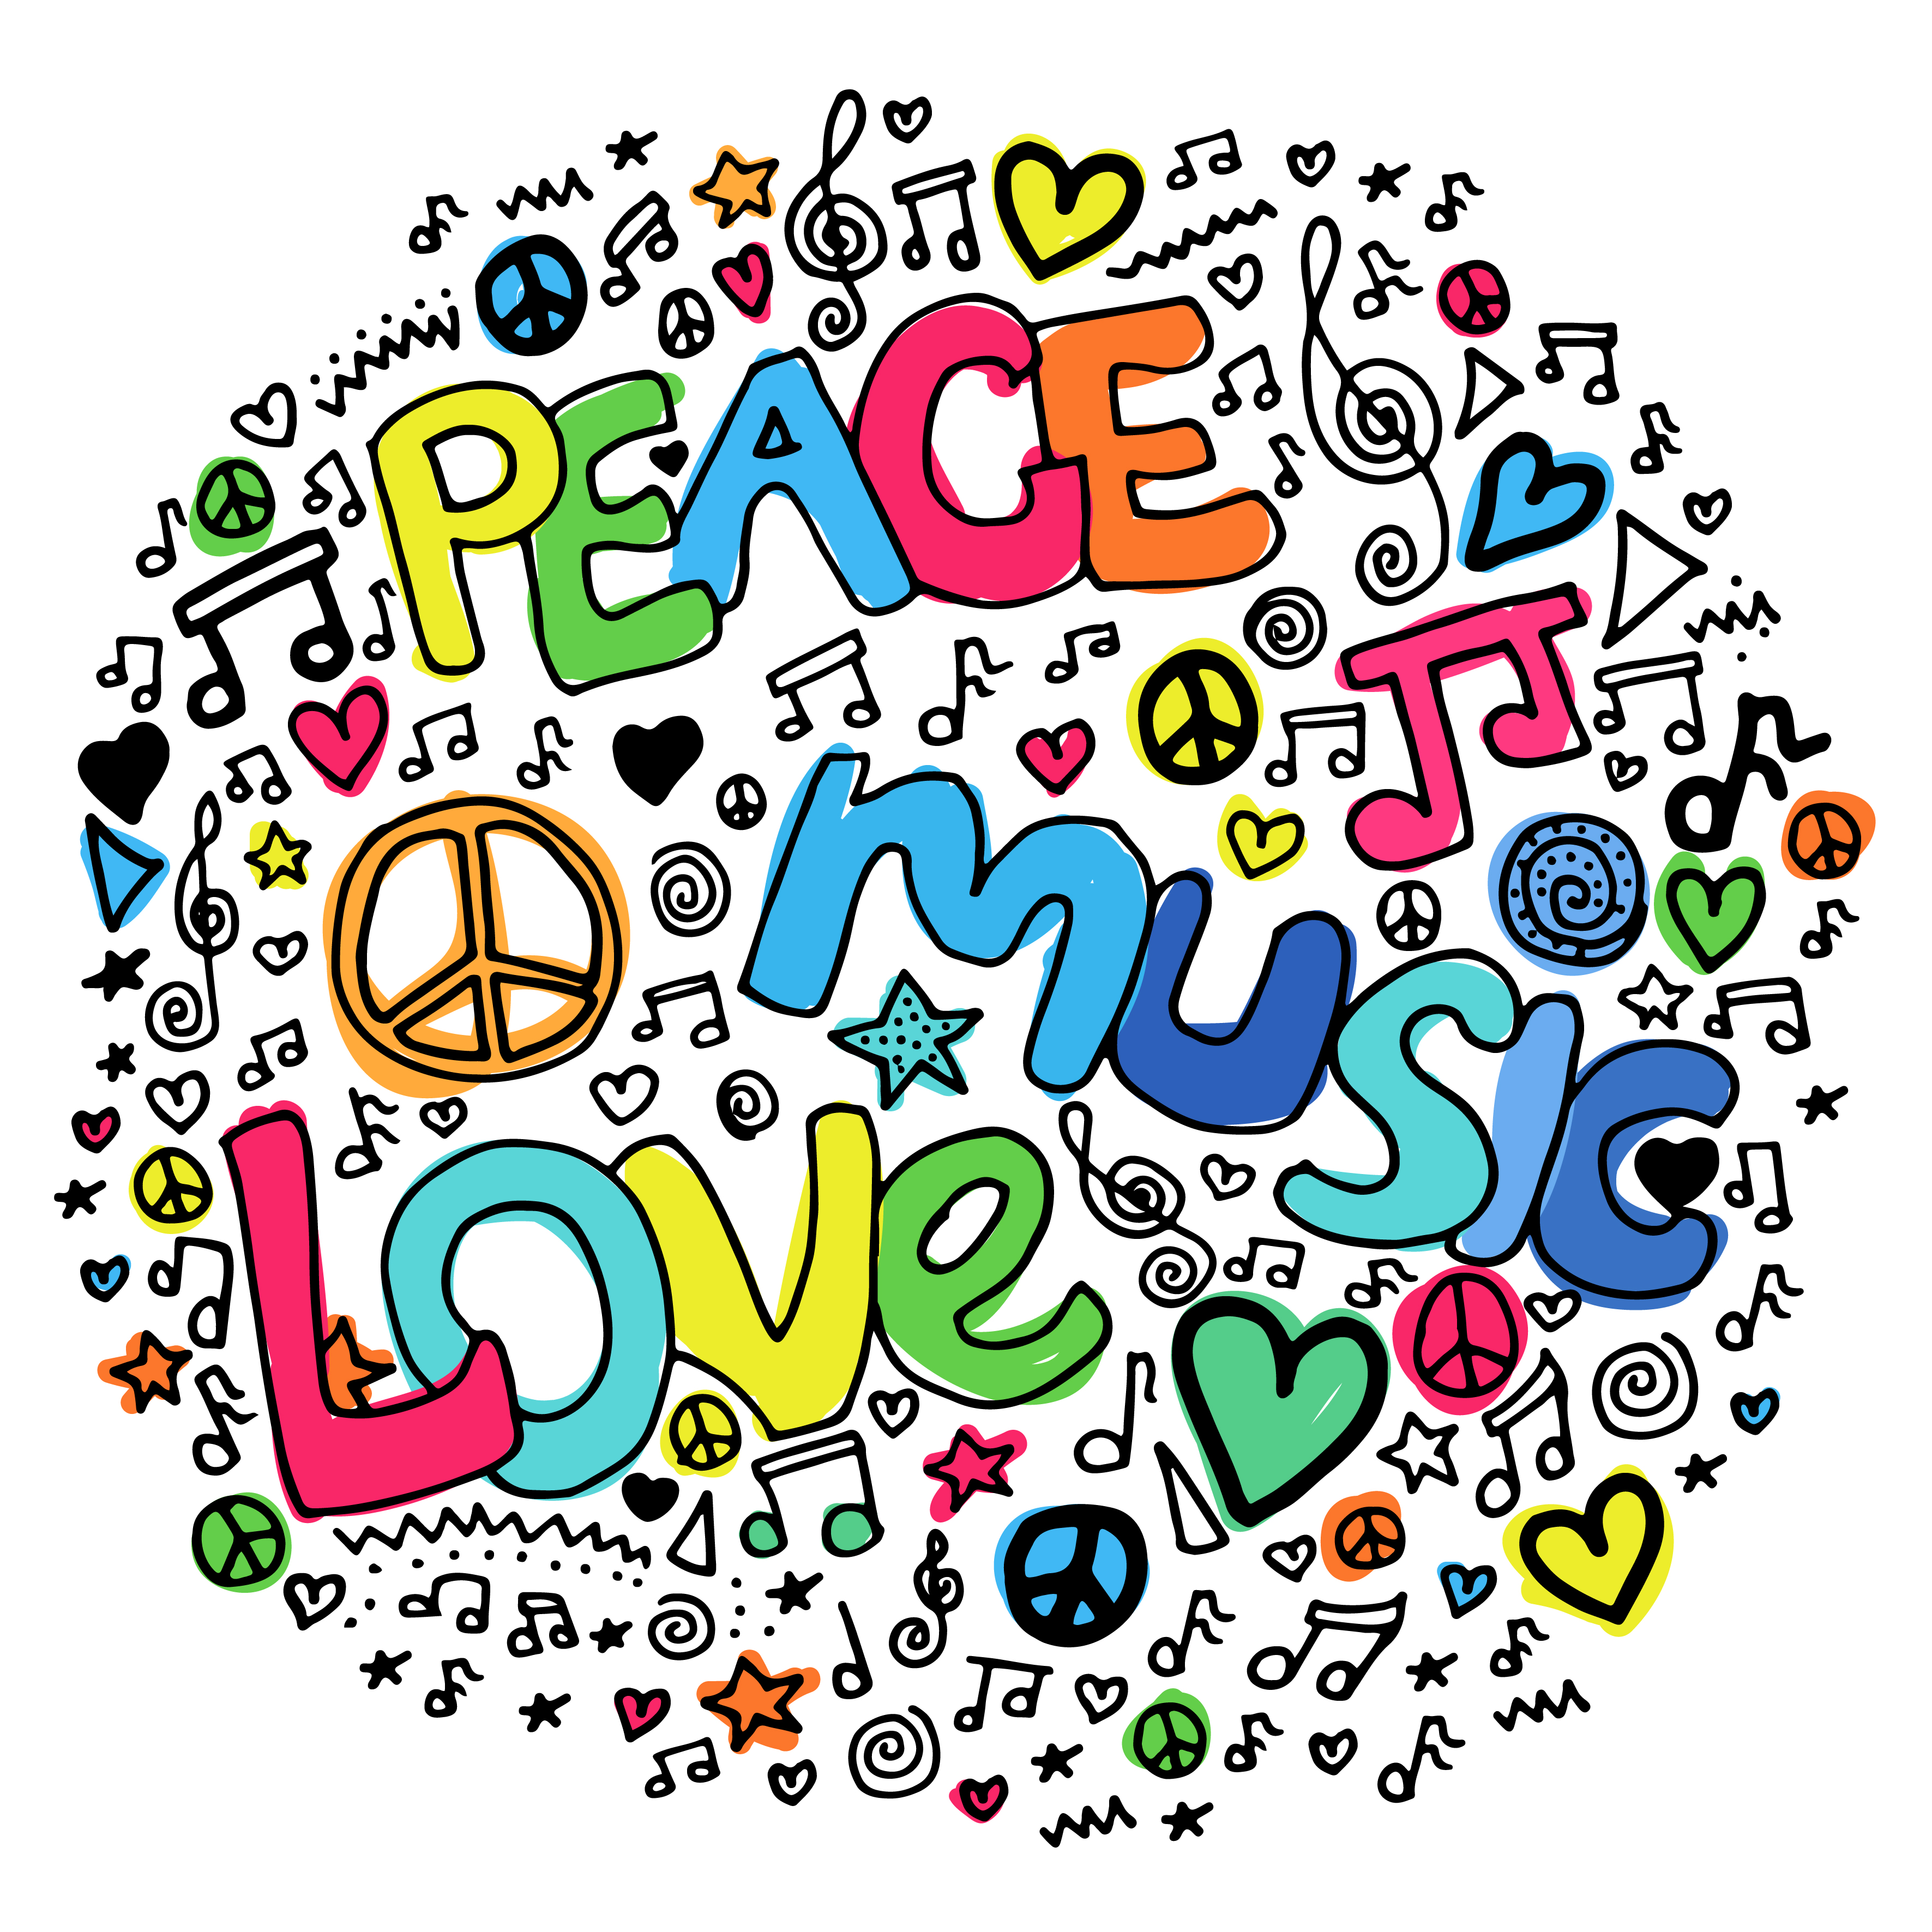 Peace Music Love Hippie Psychedelic Design Download Free Vectors Clipart Graphics Vector Art